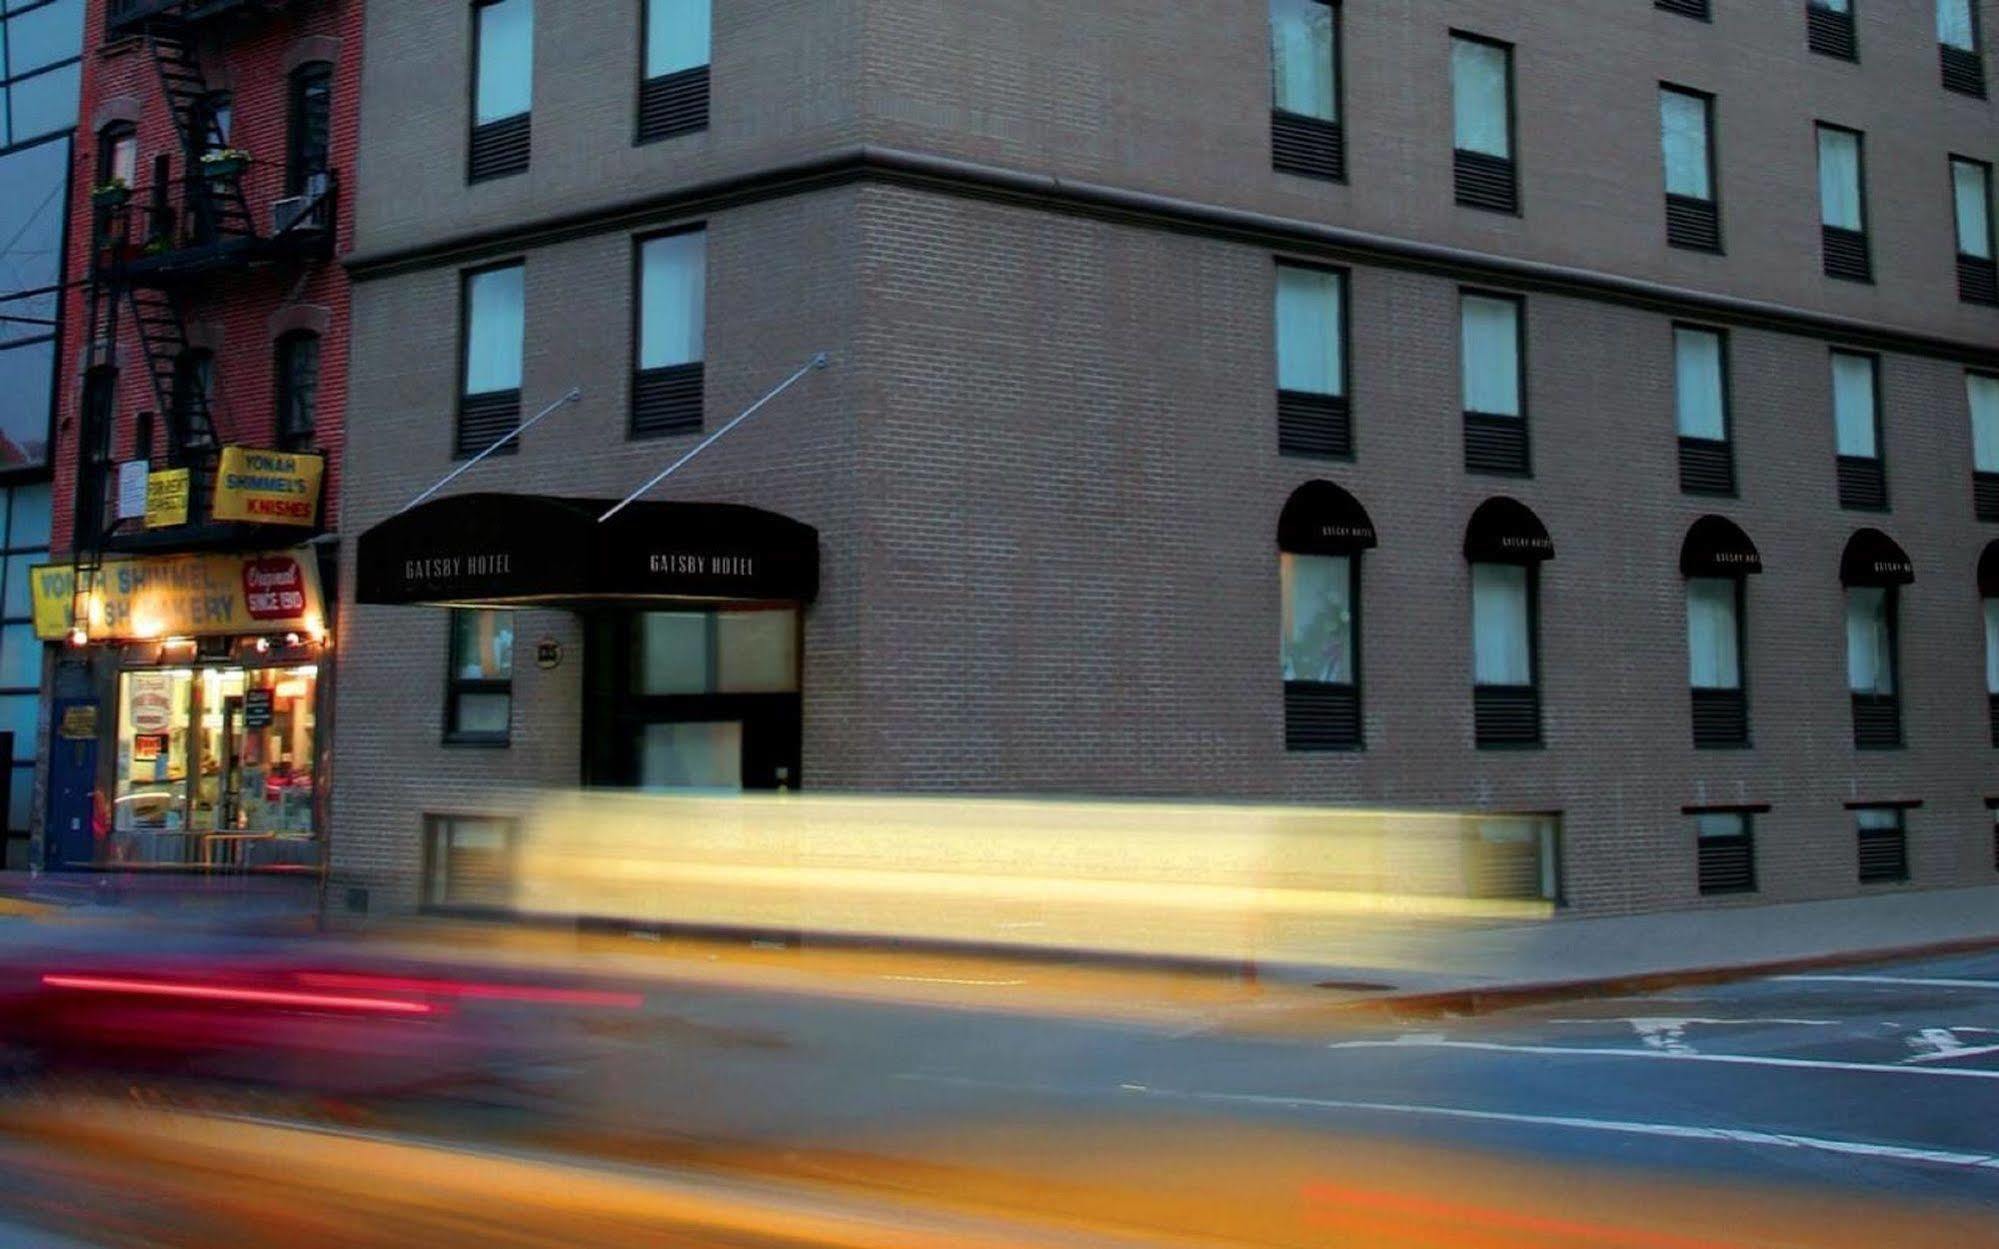 The Gatsby Hotel New York Exterior photo